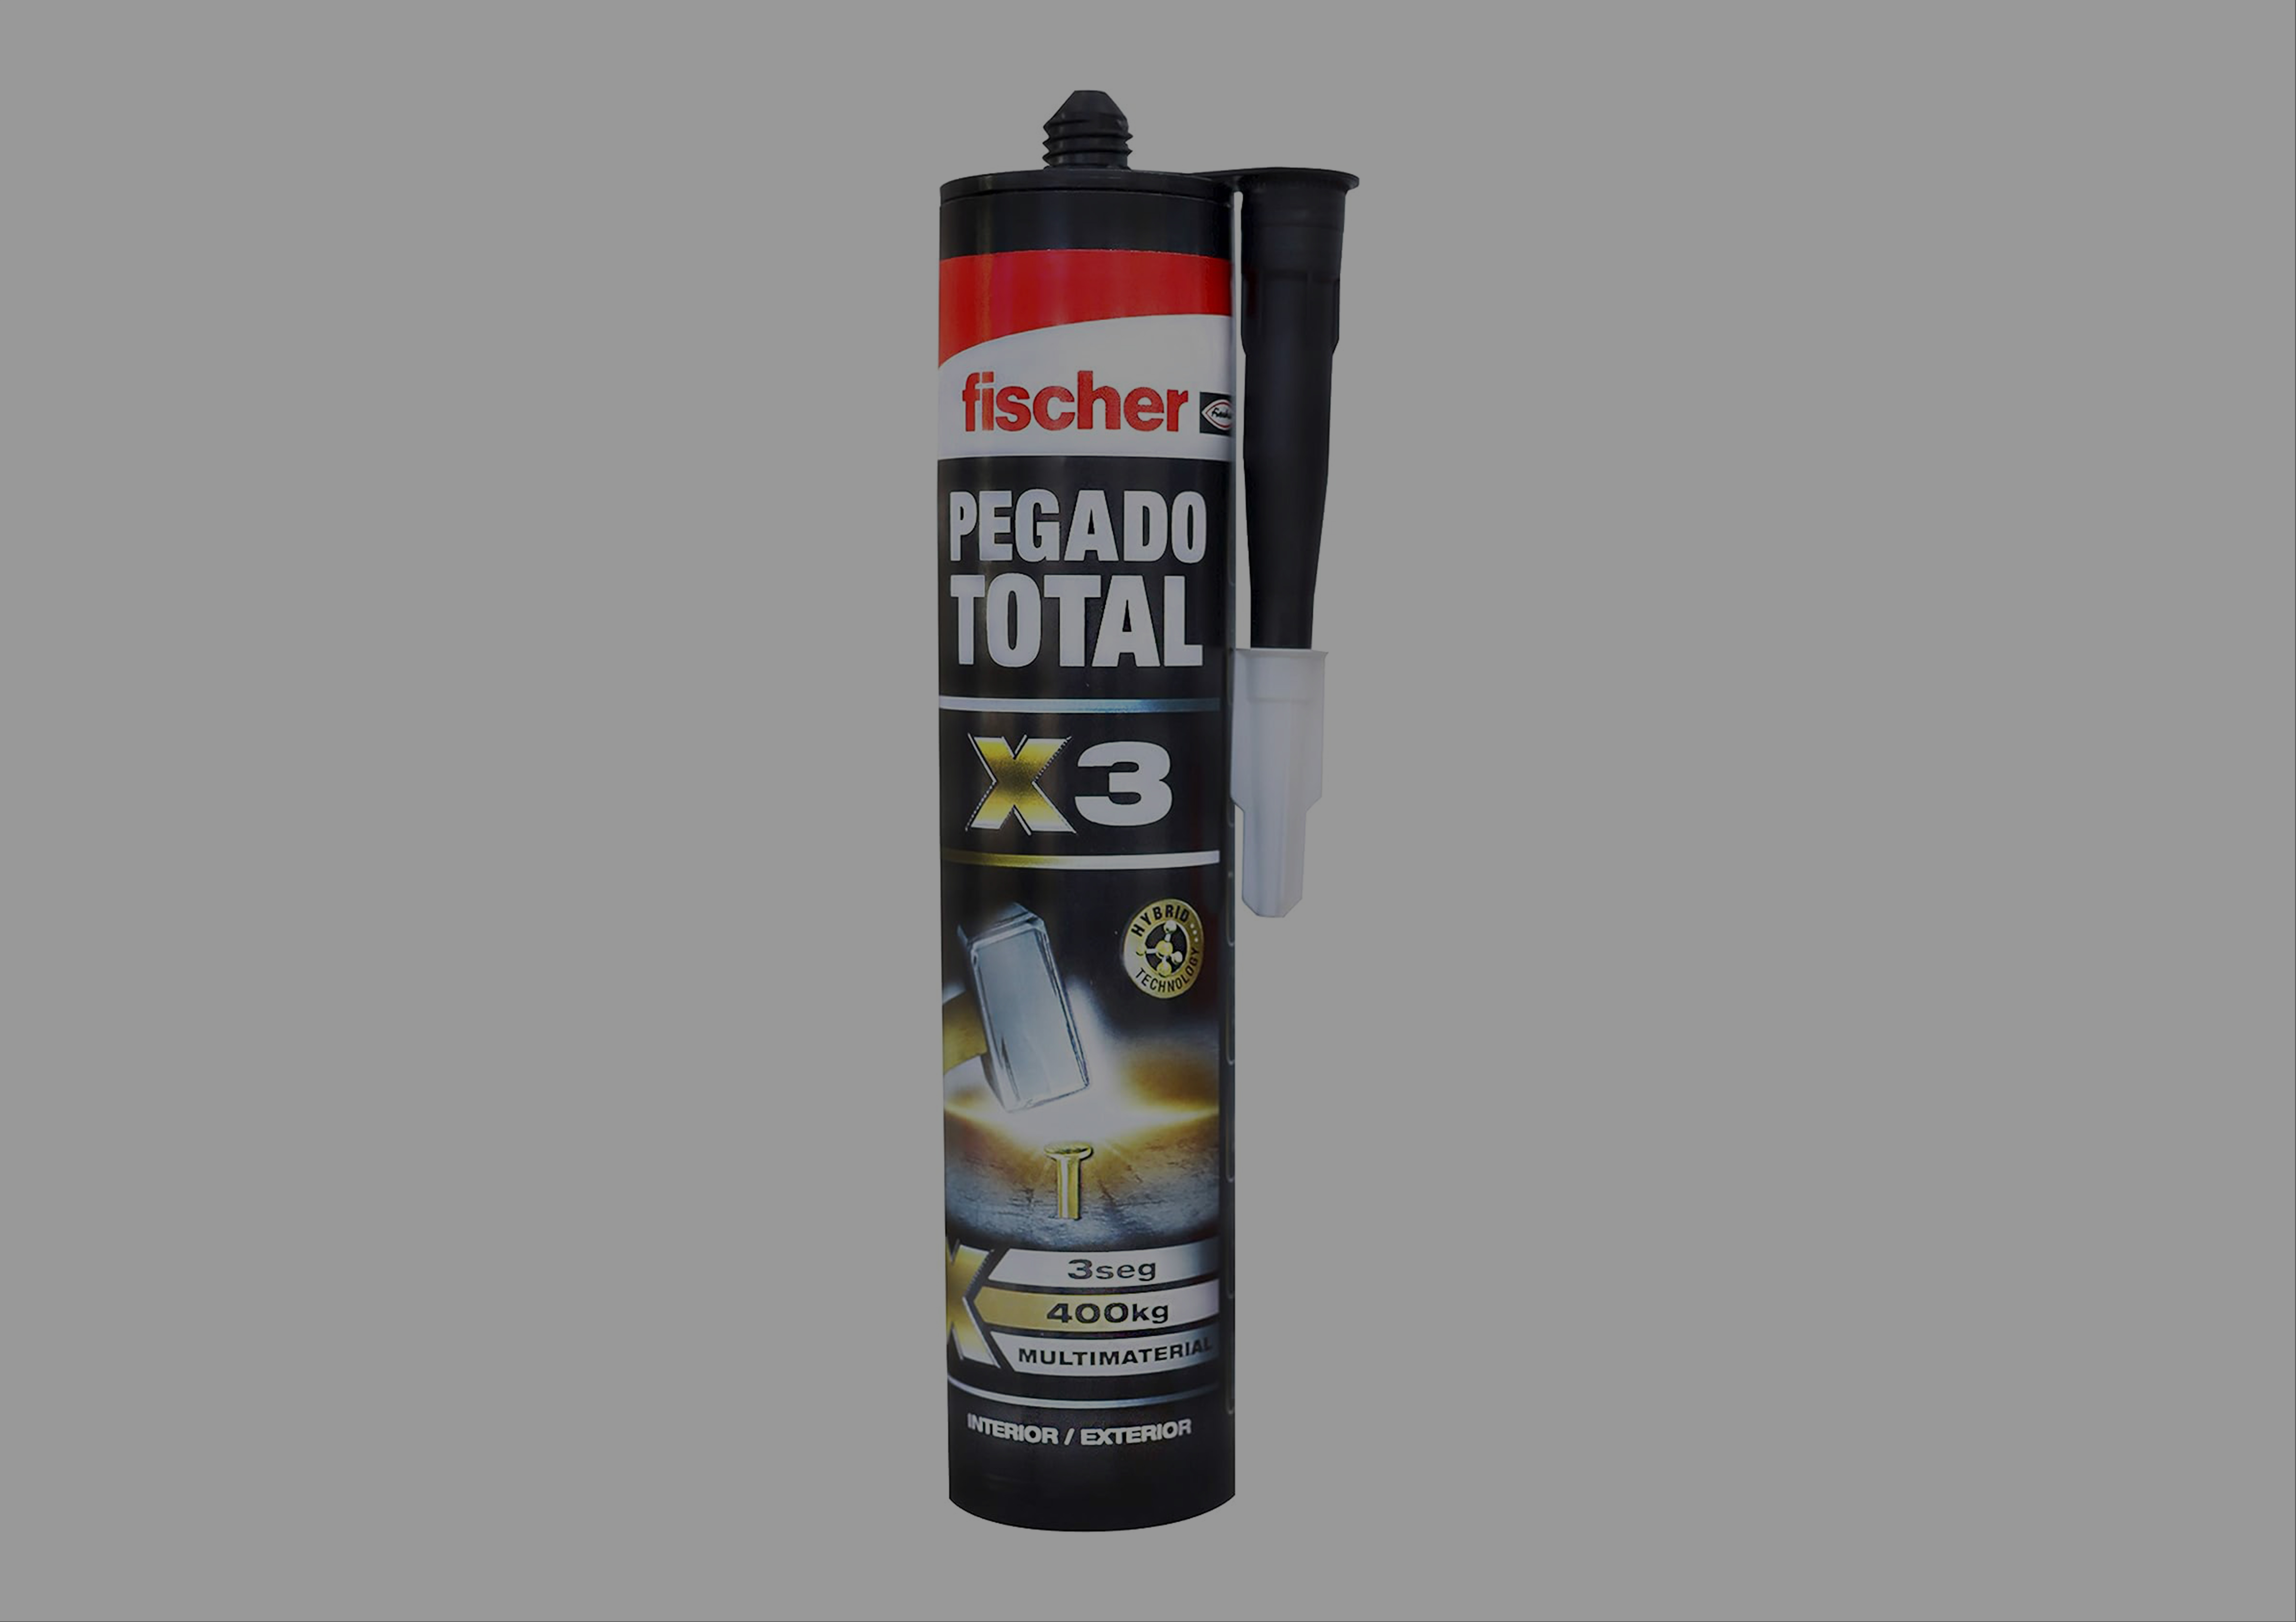 ischer - Pegado total X3